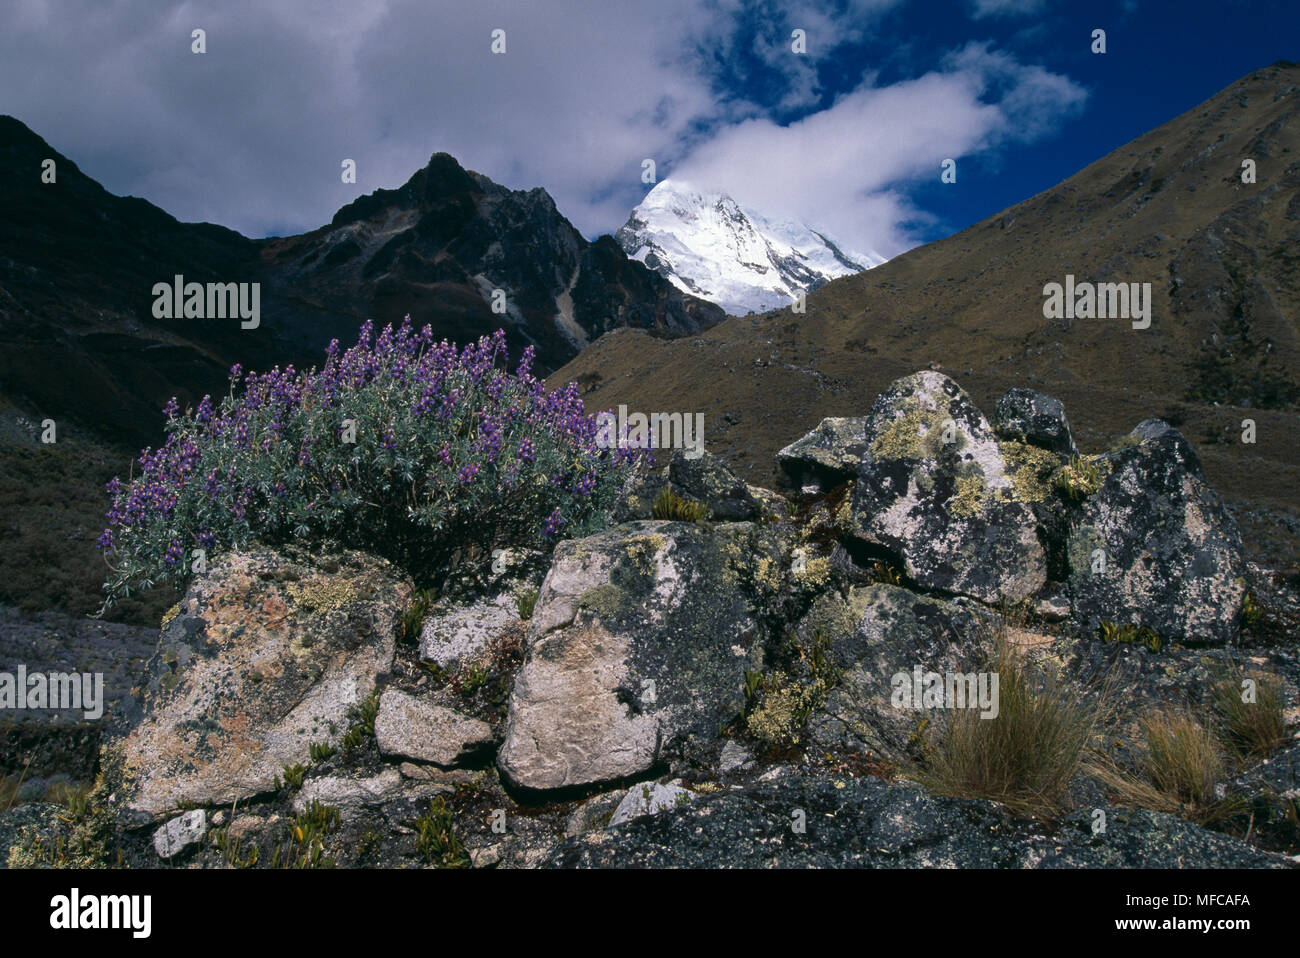 MOUNT CHOPICALQUI  6354m with Lupin clump at 4000m  Cordillera Blanca, Andes, Peru Stock Photo